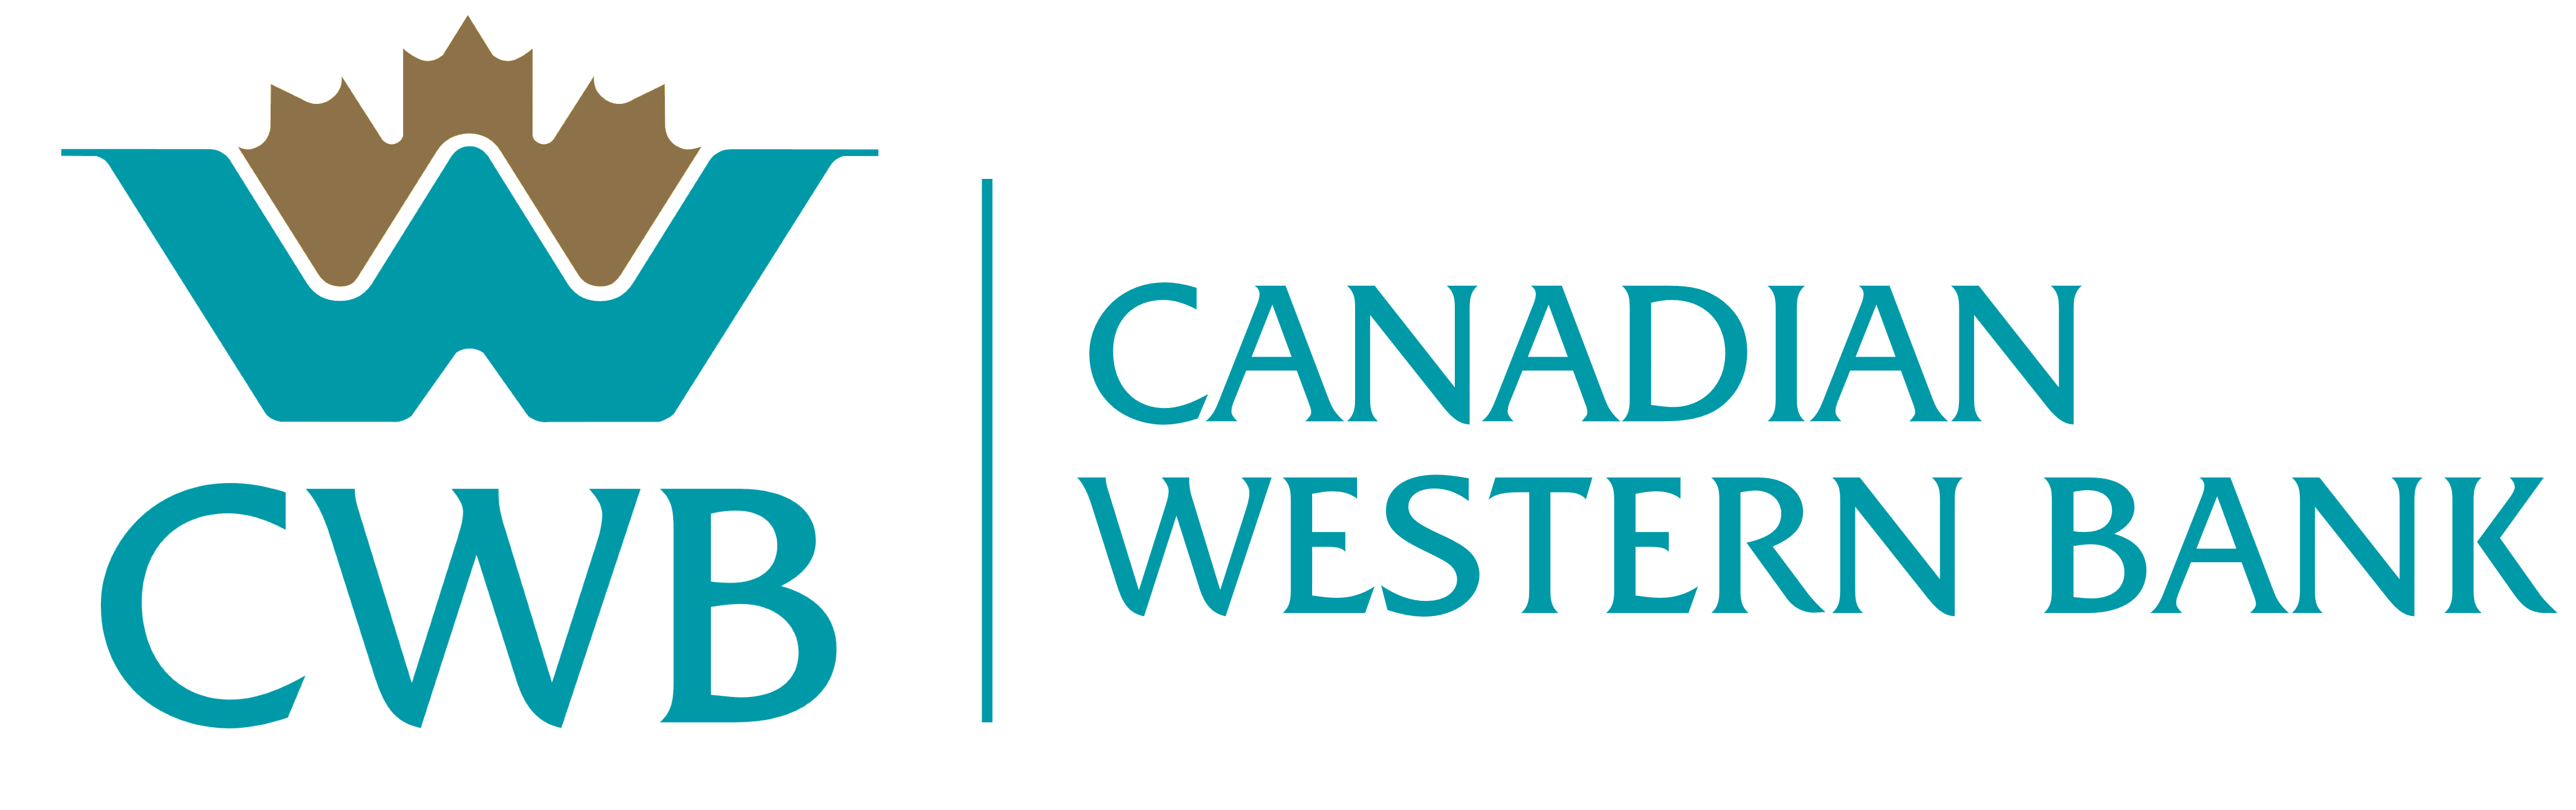 bank bca cwb canadian western bank logos download #32736